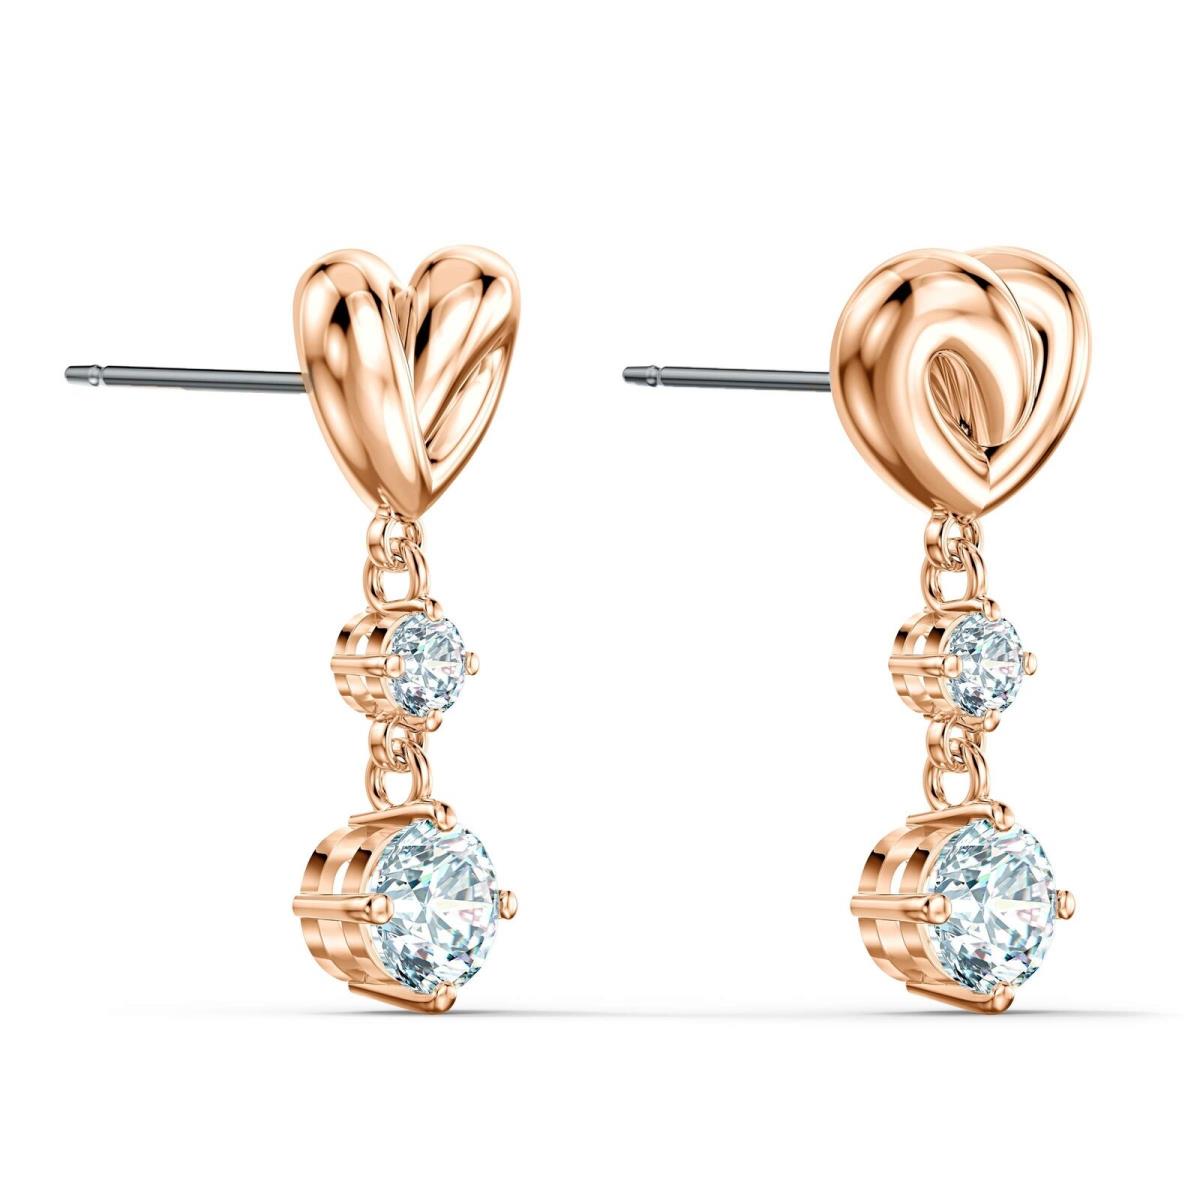 Swarovski Lifelong Heart Necklace Earrings and Bracelet Crystal Jewelry